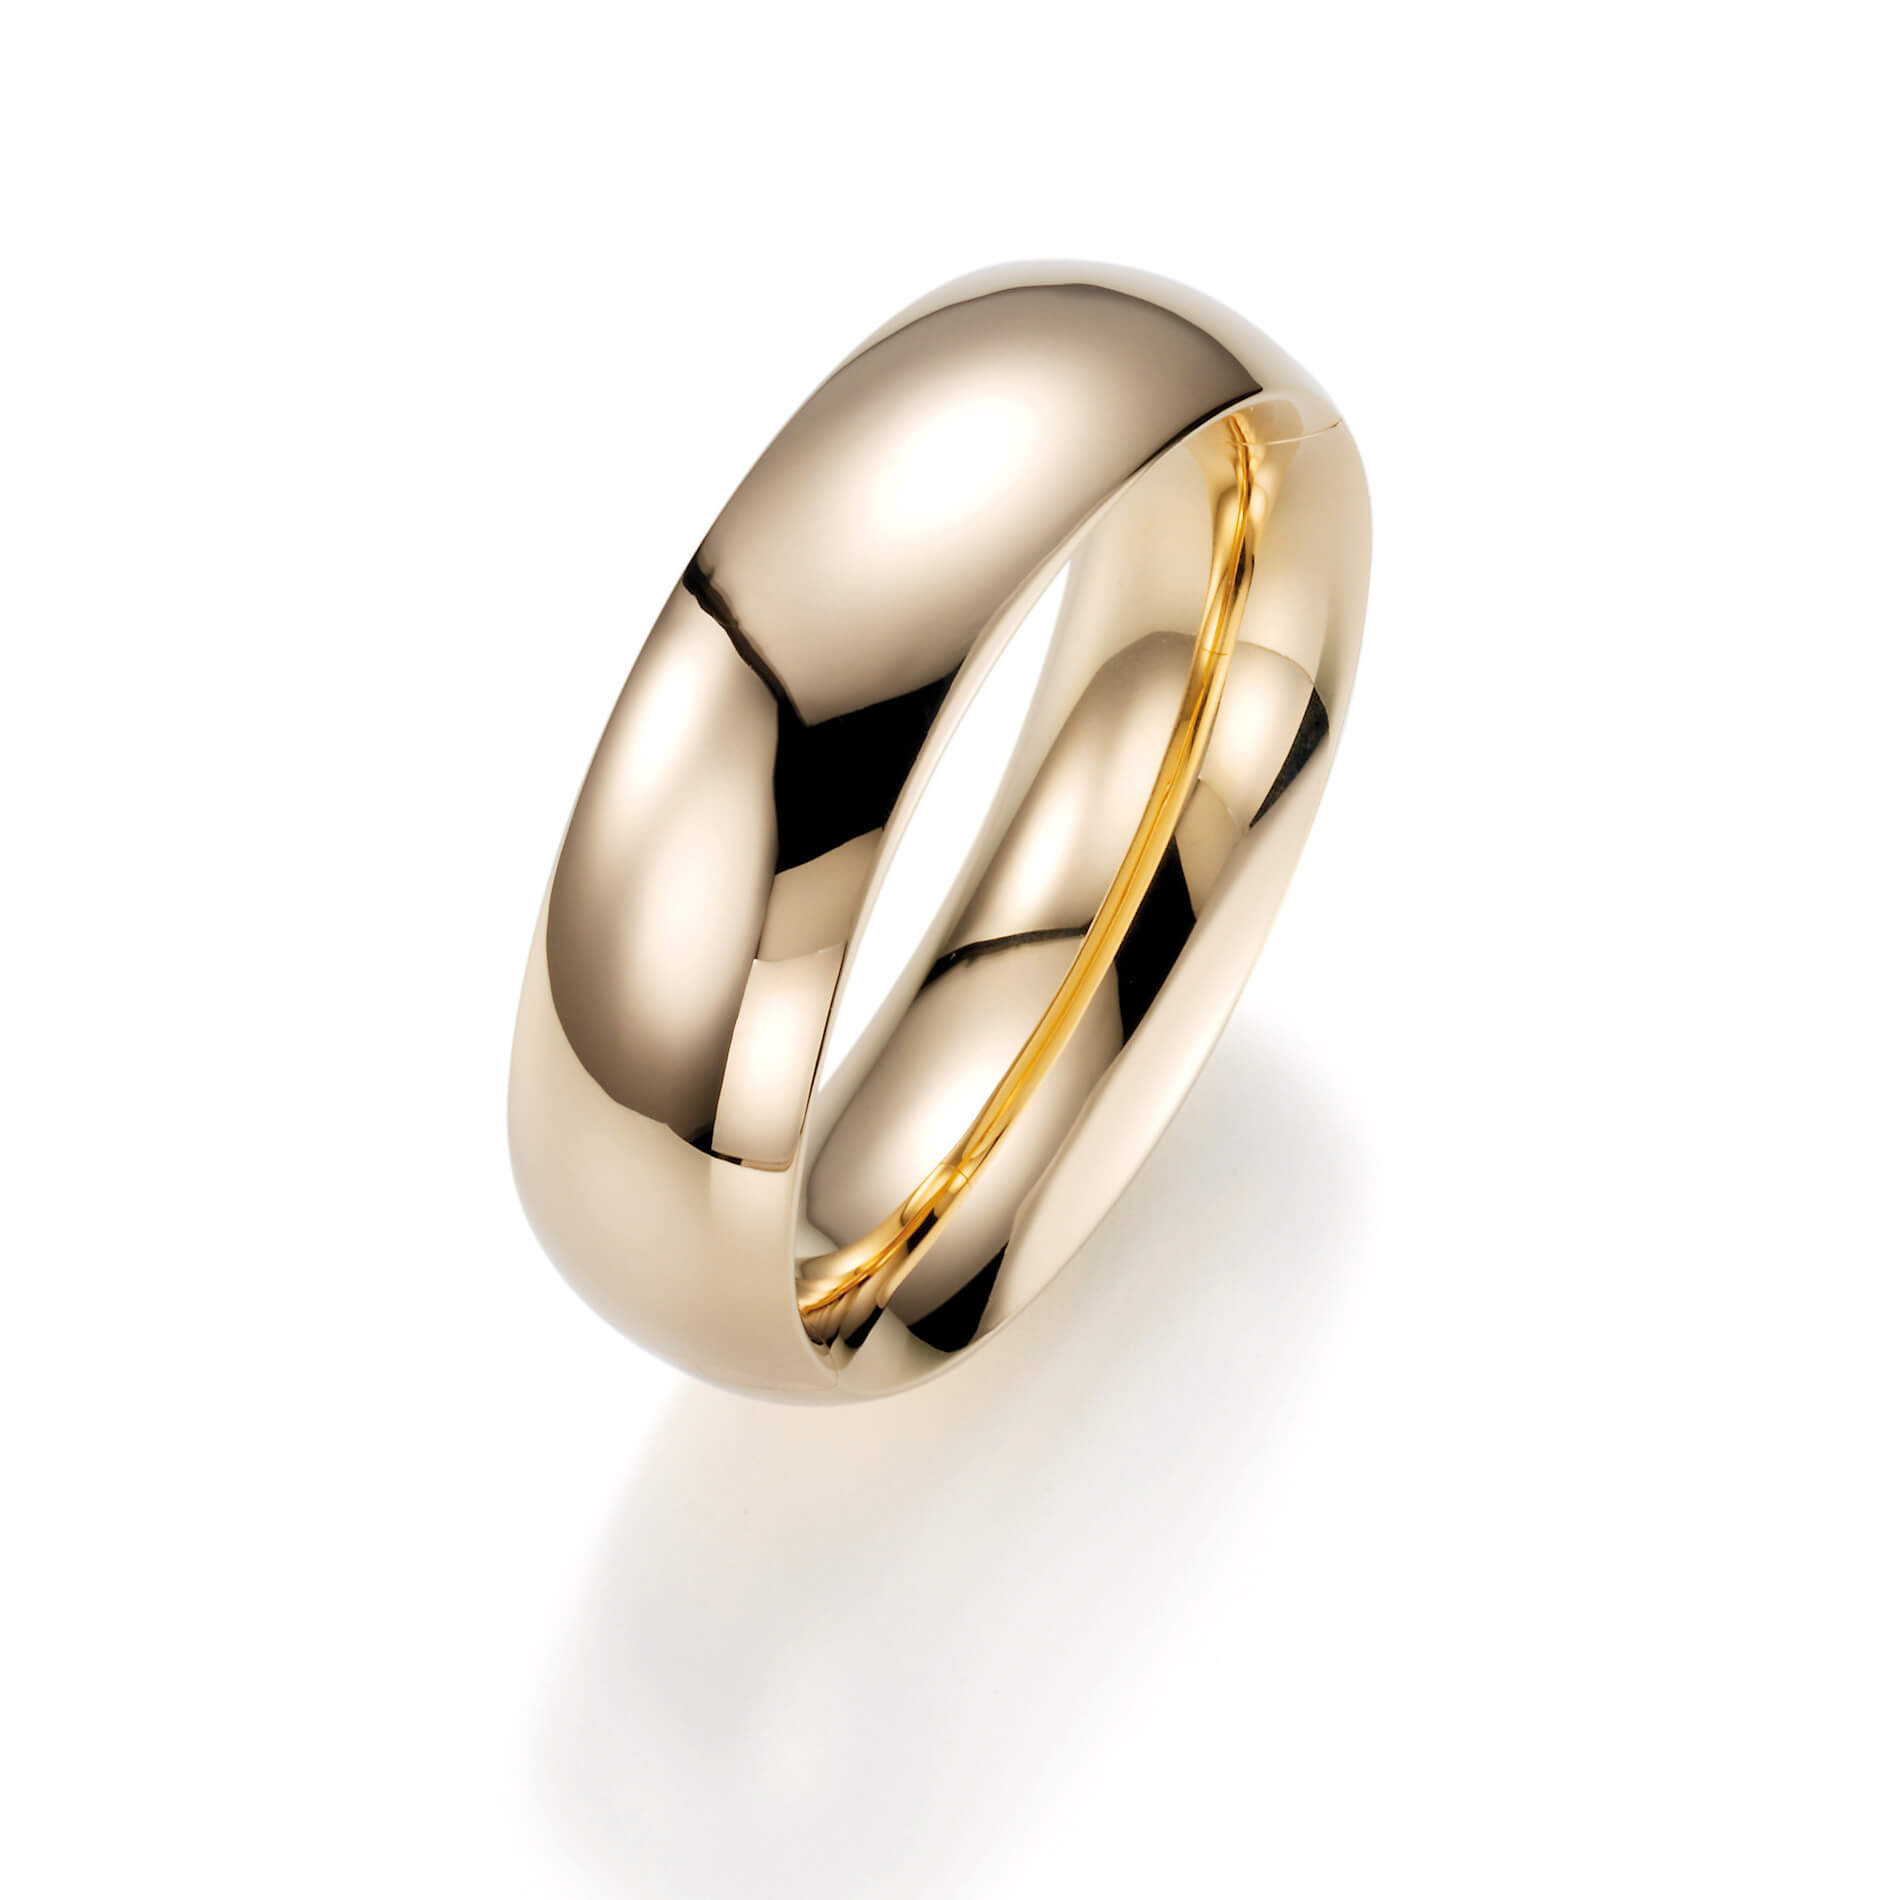 Engros Custom engros OEM/ODM smykker sølv og guld ringe smykker leverandør